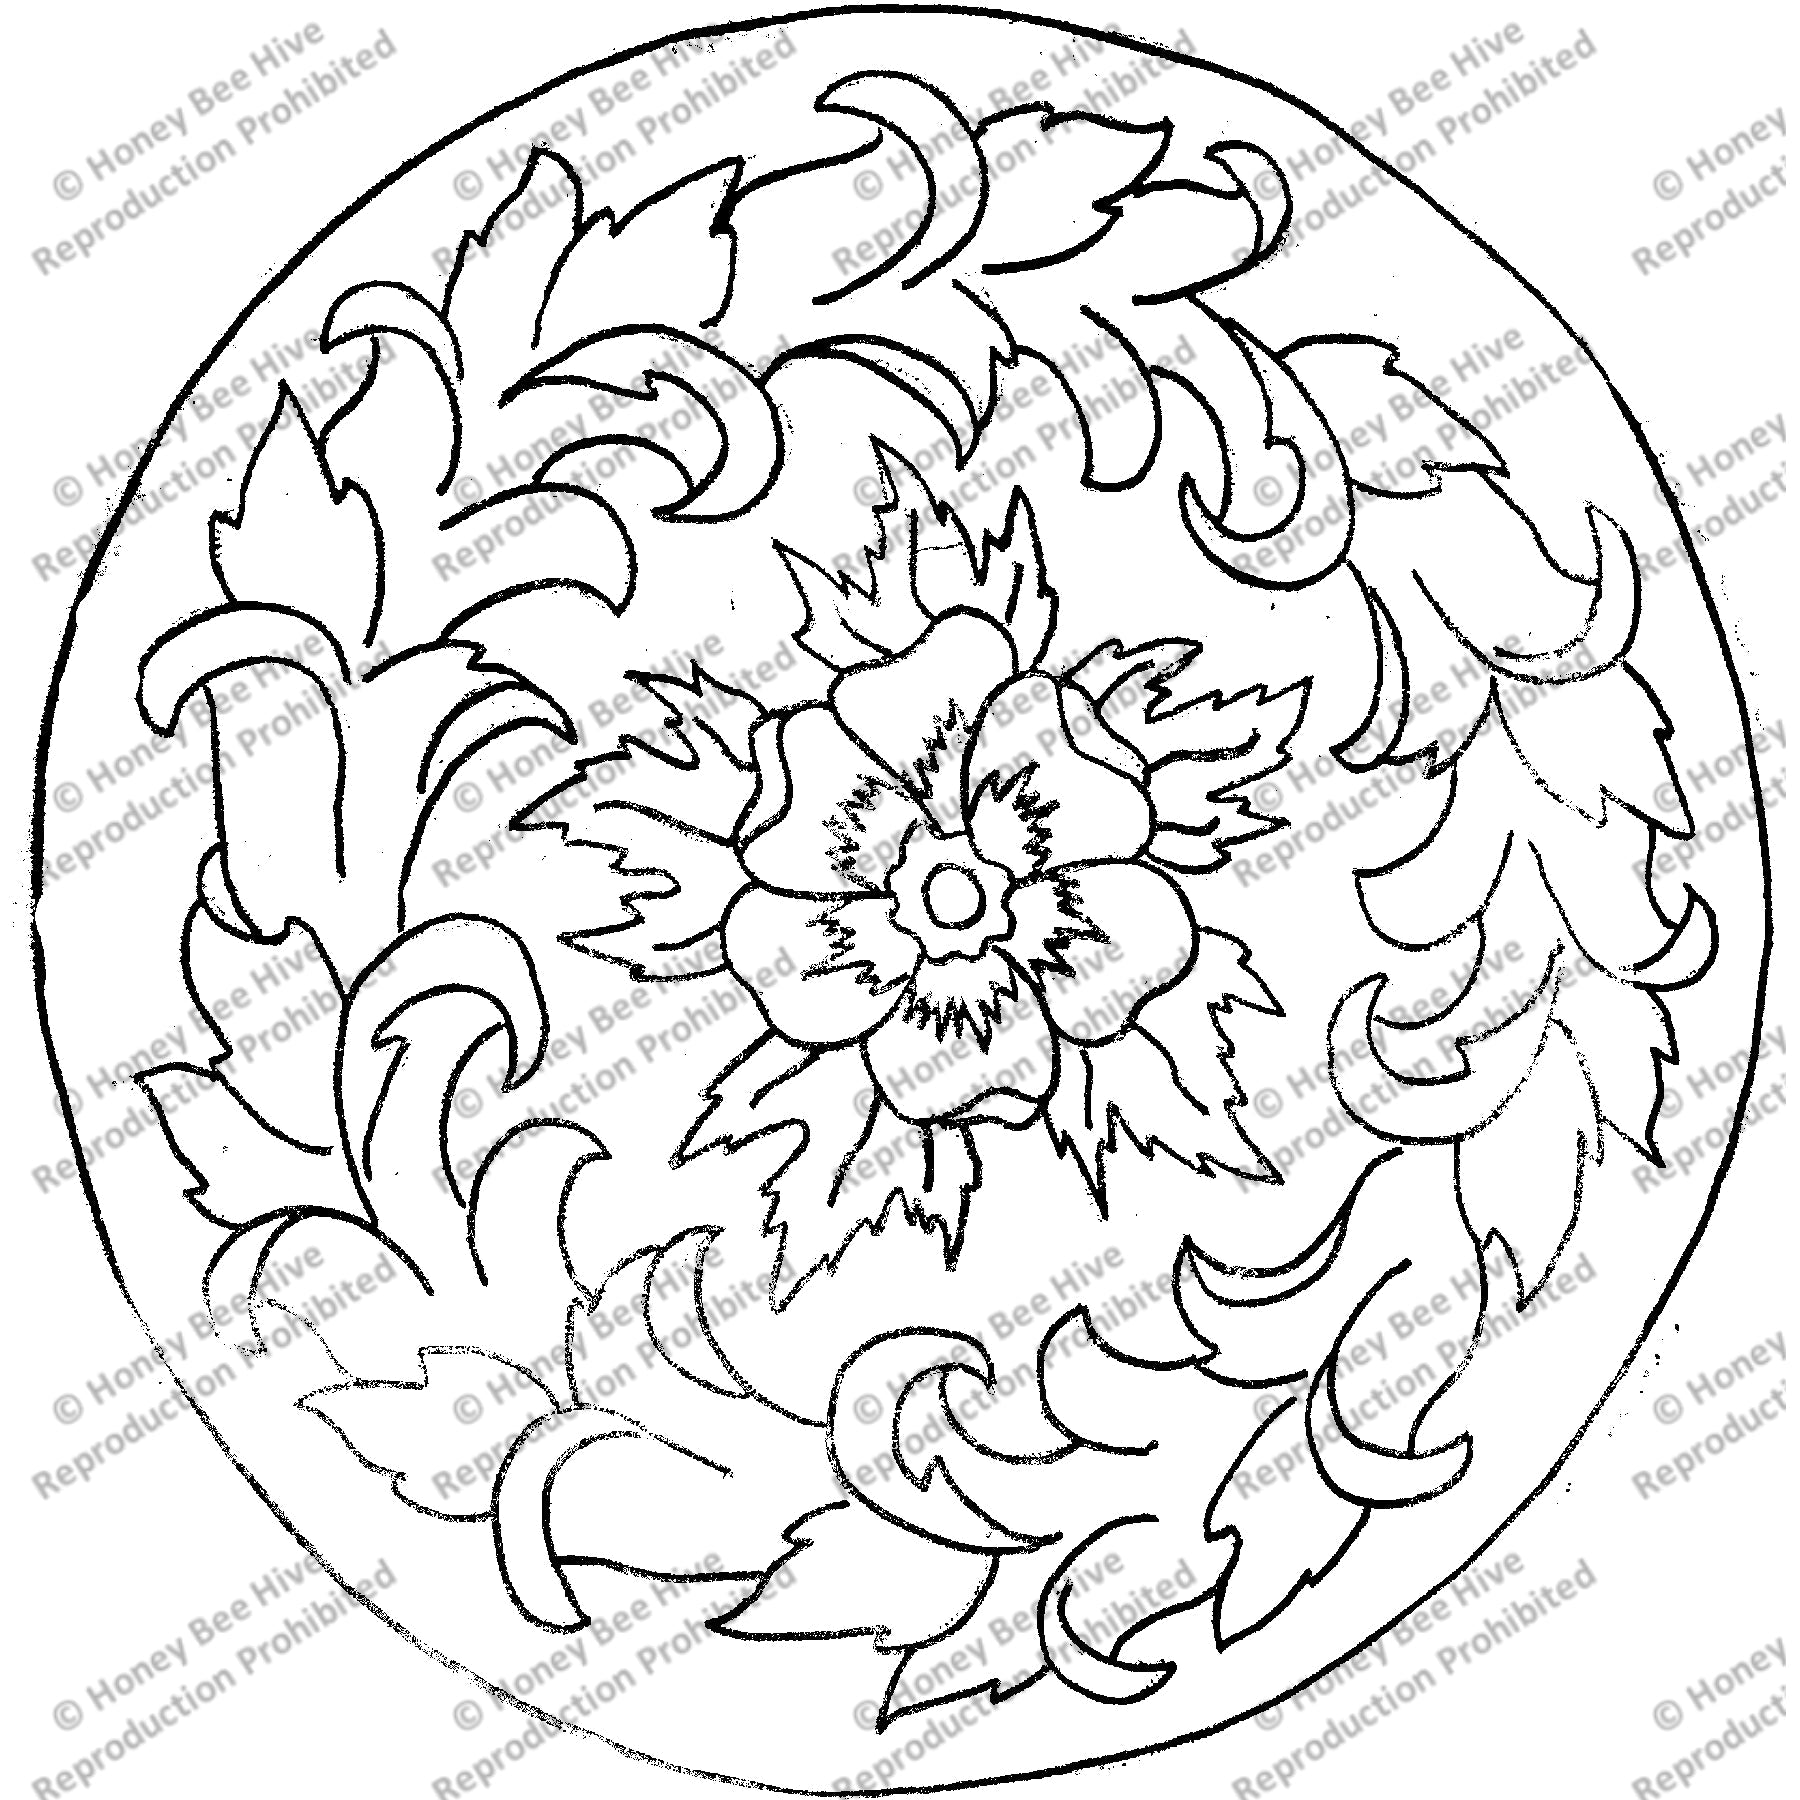 Anemone Fist Scroll, rug hooking pattern